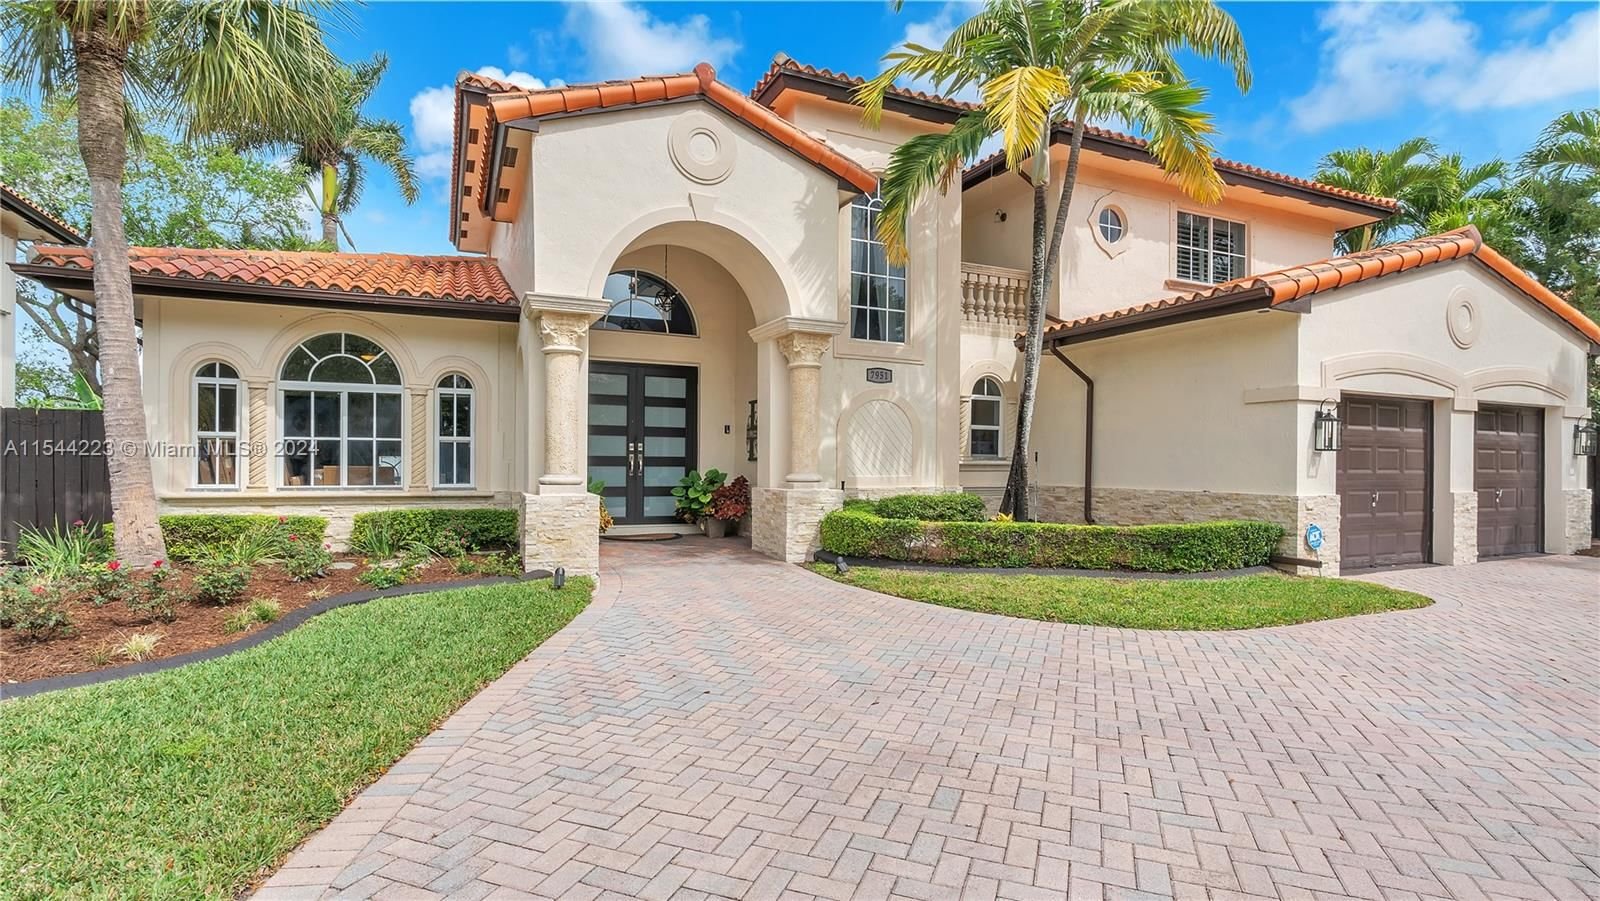 Real estate property located at 7951 159th Ter, Miami-Dade County, SILVERCREST LAKE ESTATES, Miami Lakes, FL